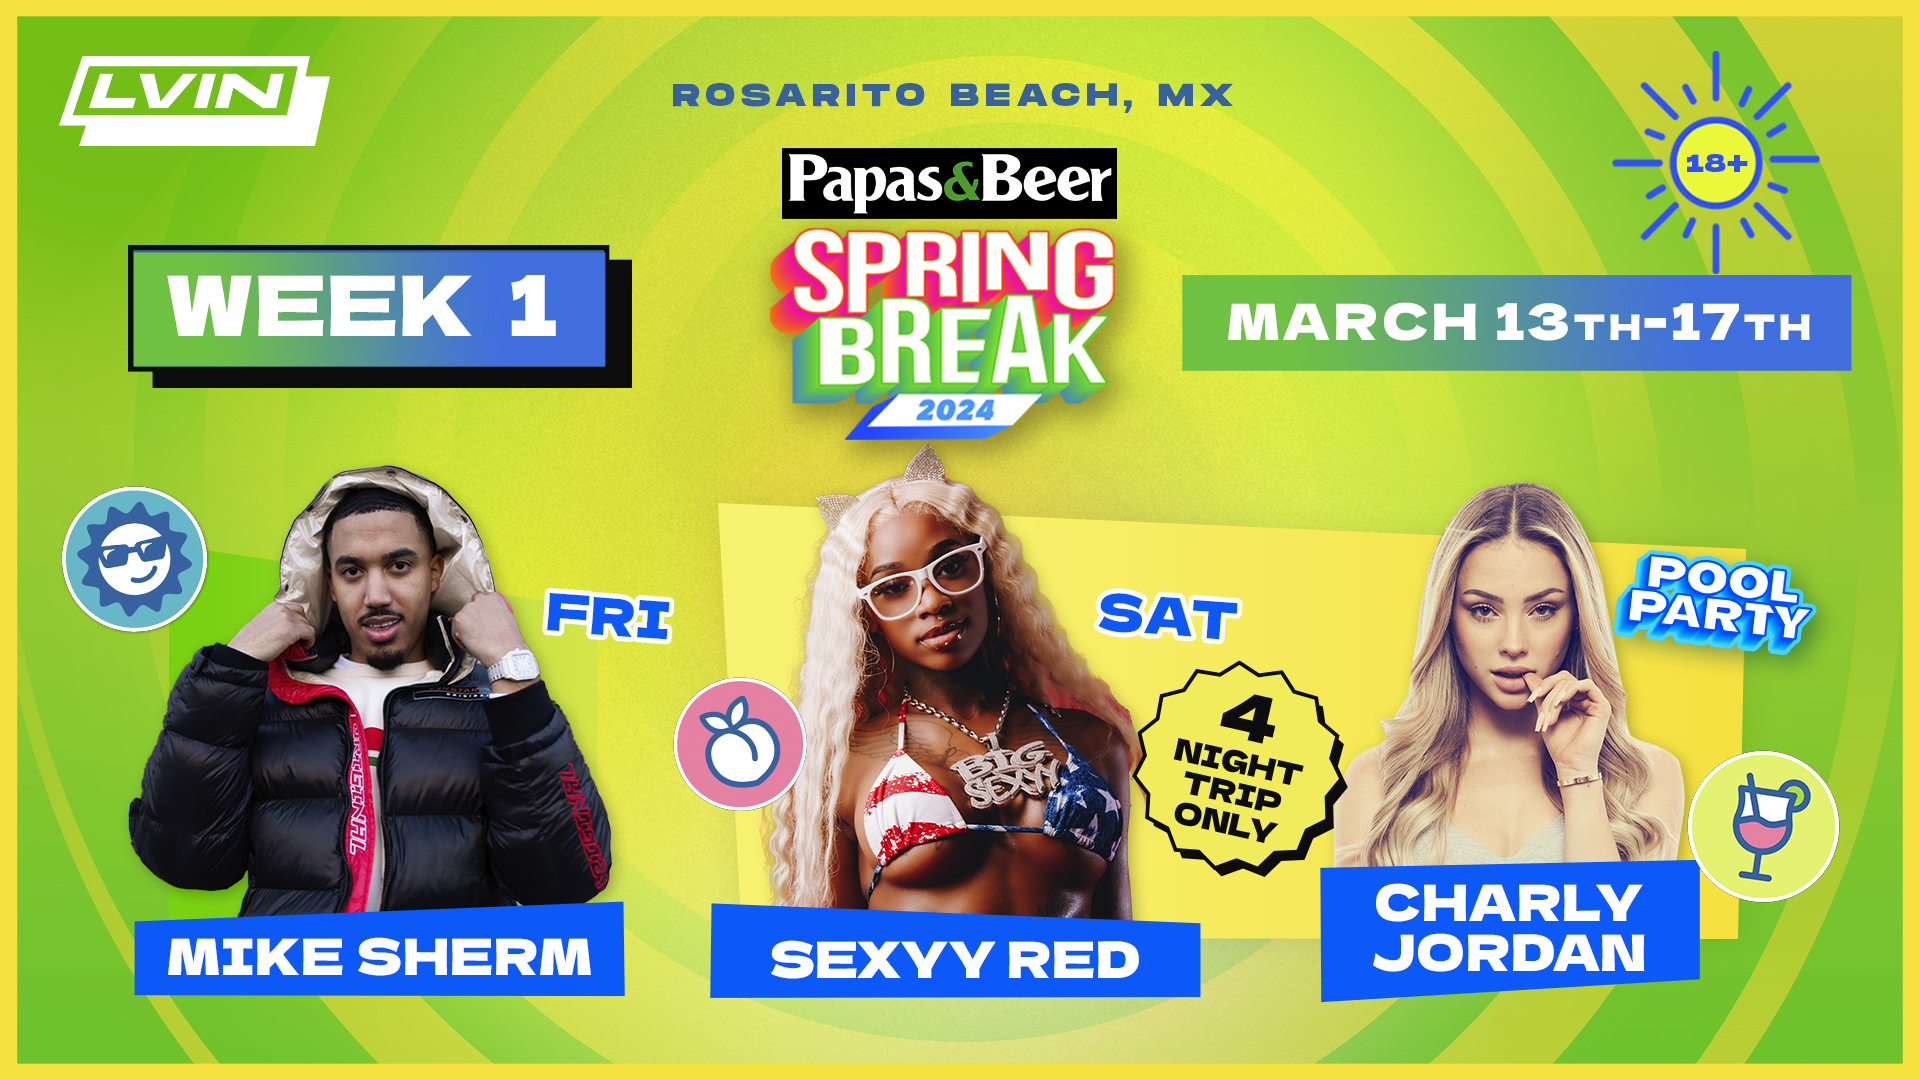 Rosarito Beach Spring Break 2024 Week 1 DJ Artist Mike Sherm Sexyy Red Charly Jordan Papas&Beer Concert LVIN